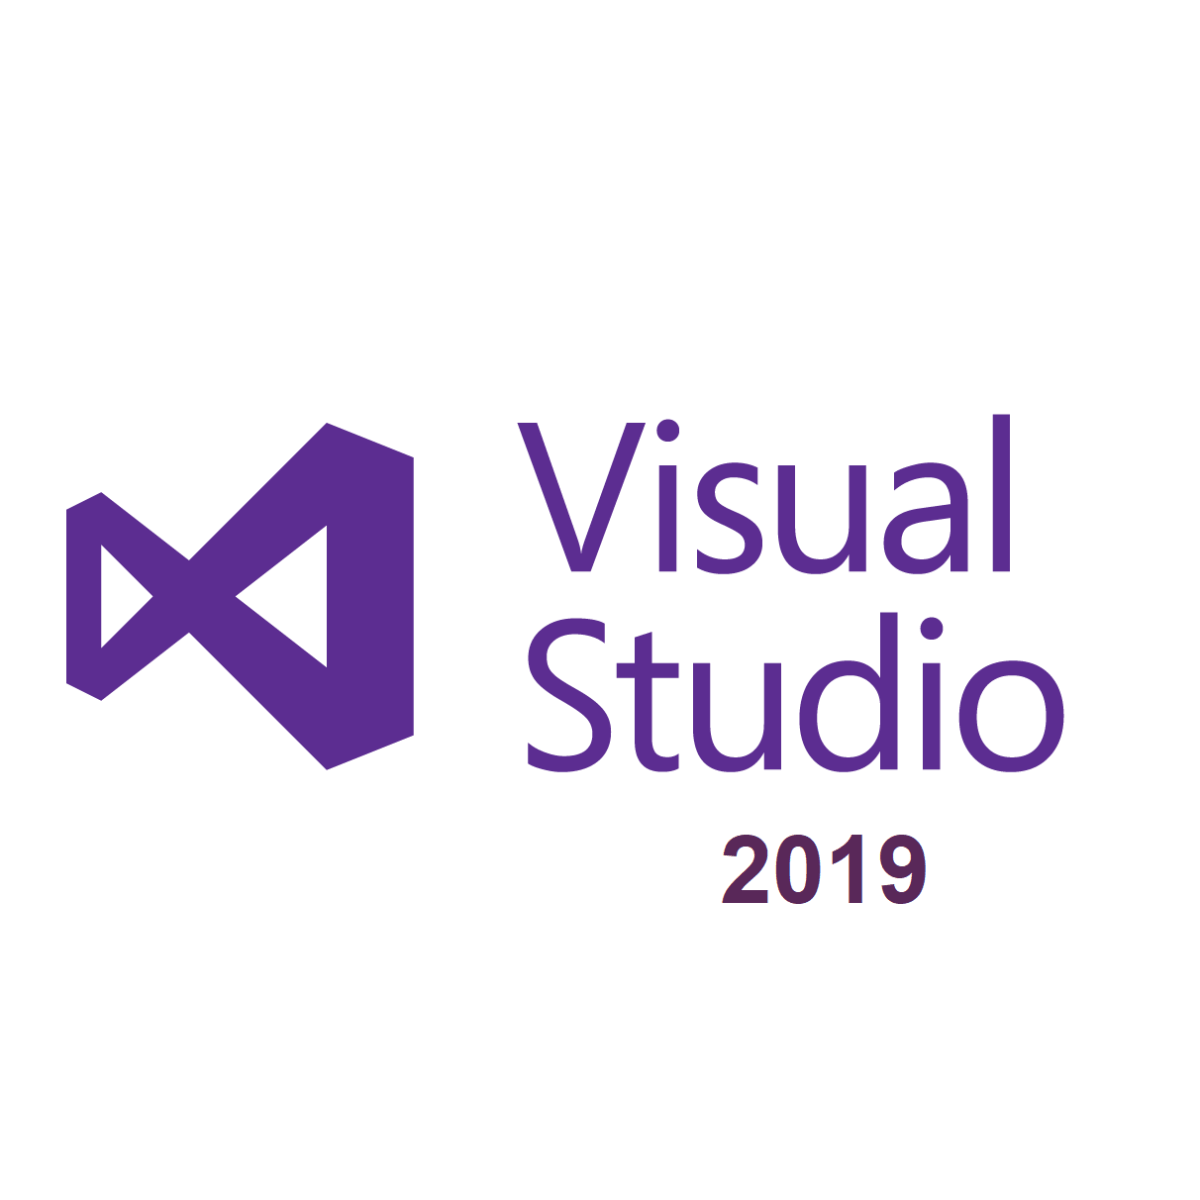 Microsoft's Visual Studio 2019 version 16.2 brings productivity changes